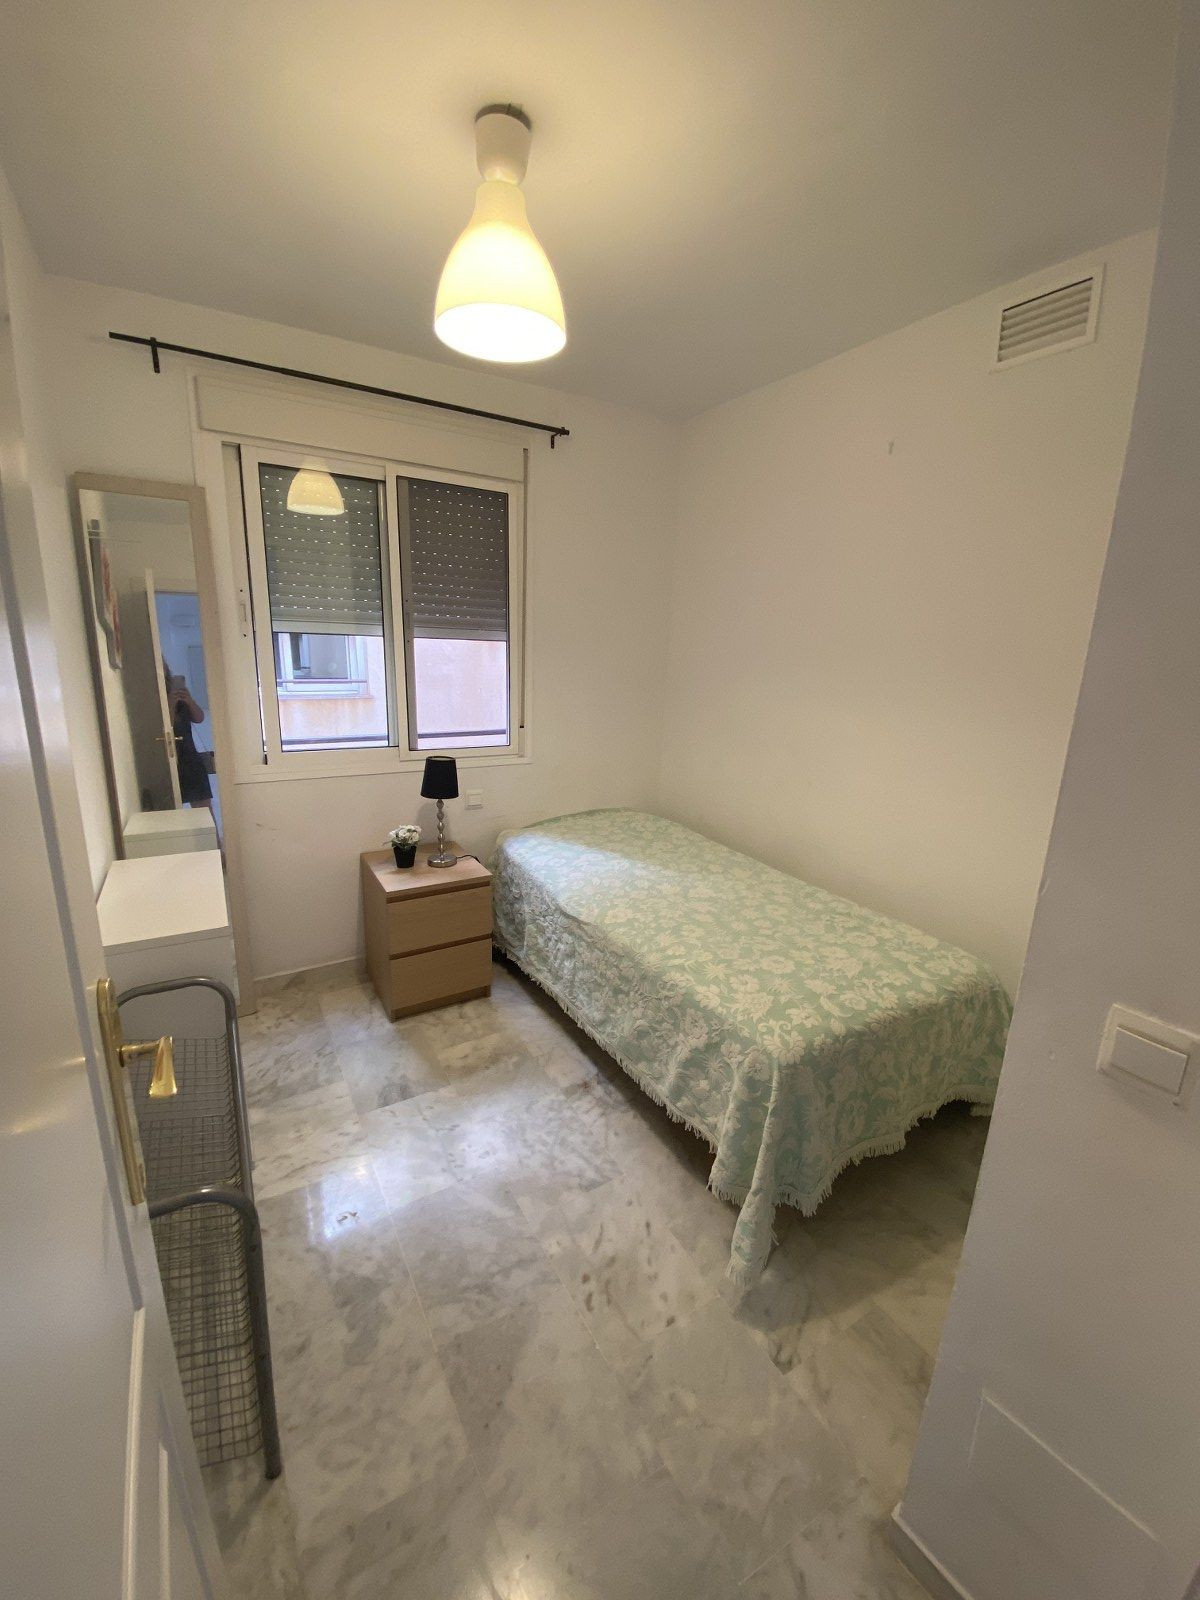 2 bedroom Apartment For Sale in Benalmadena, Málaga - thumb 17